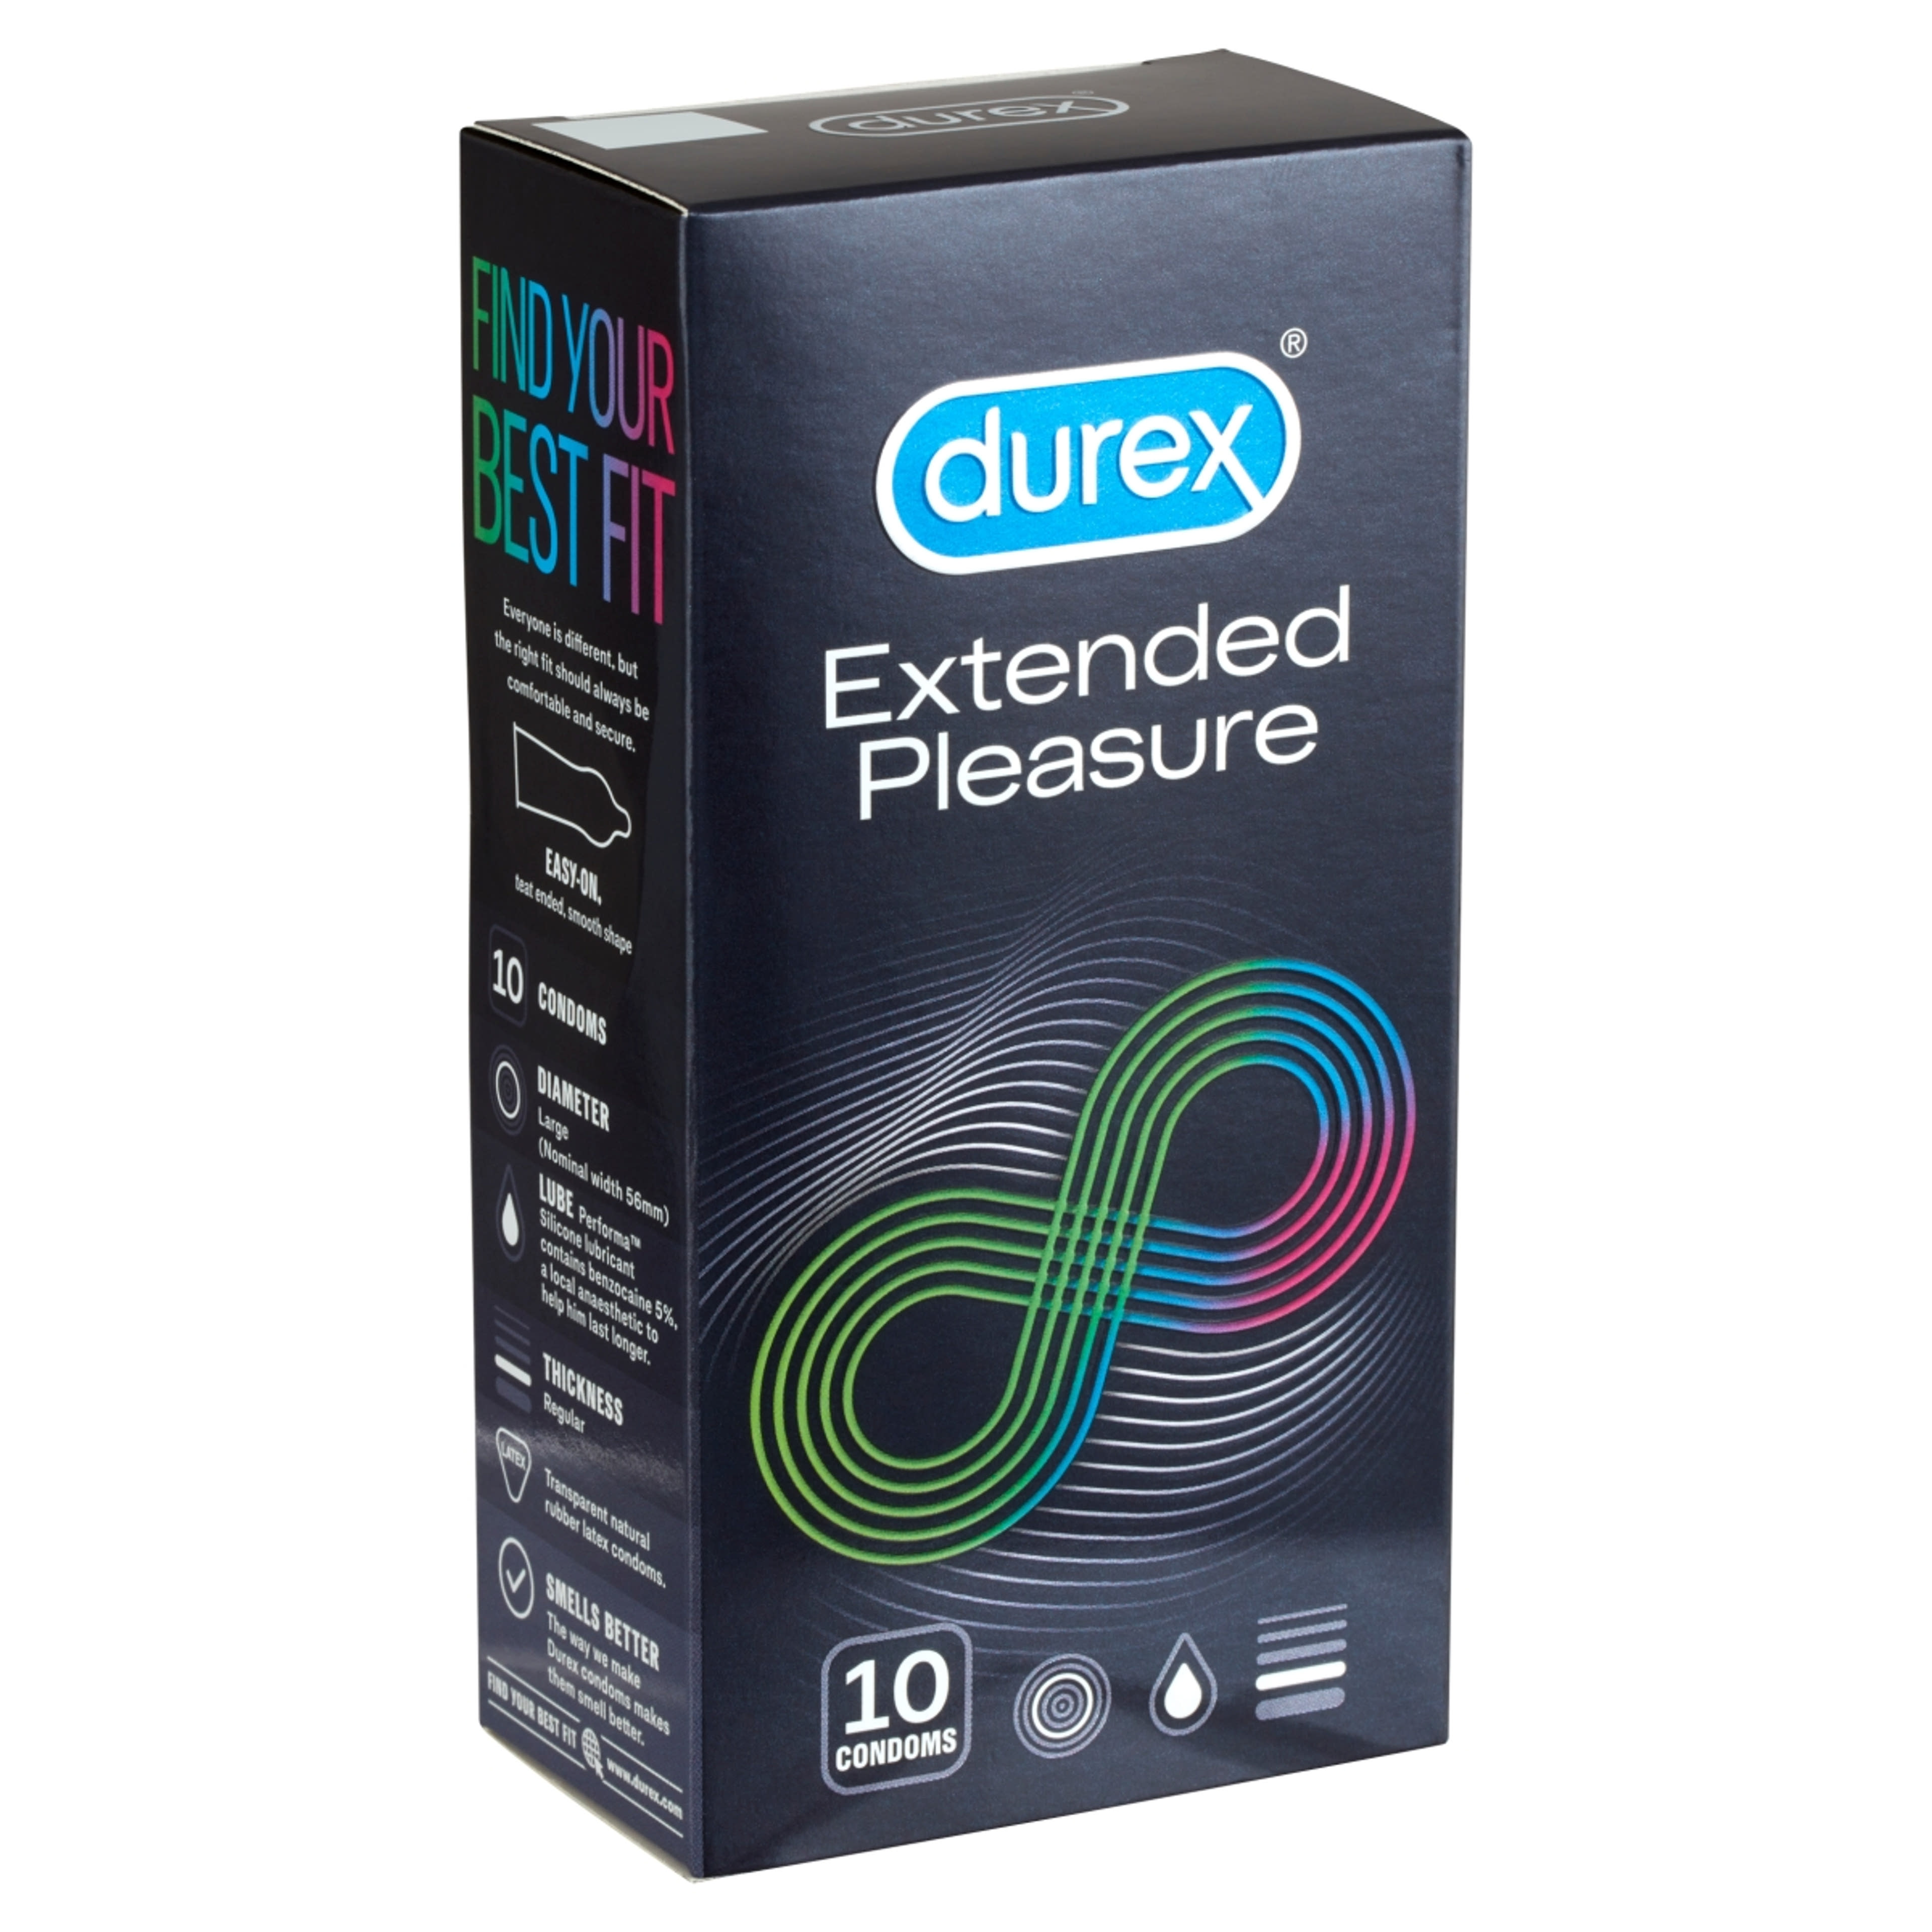 Durex ovszer extended pleasure - 10 db-2